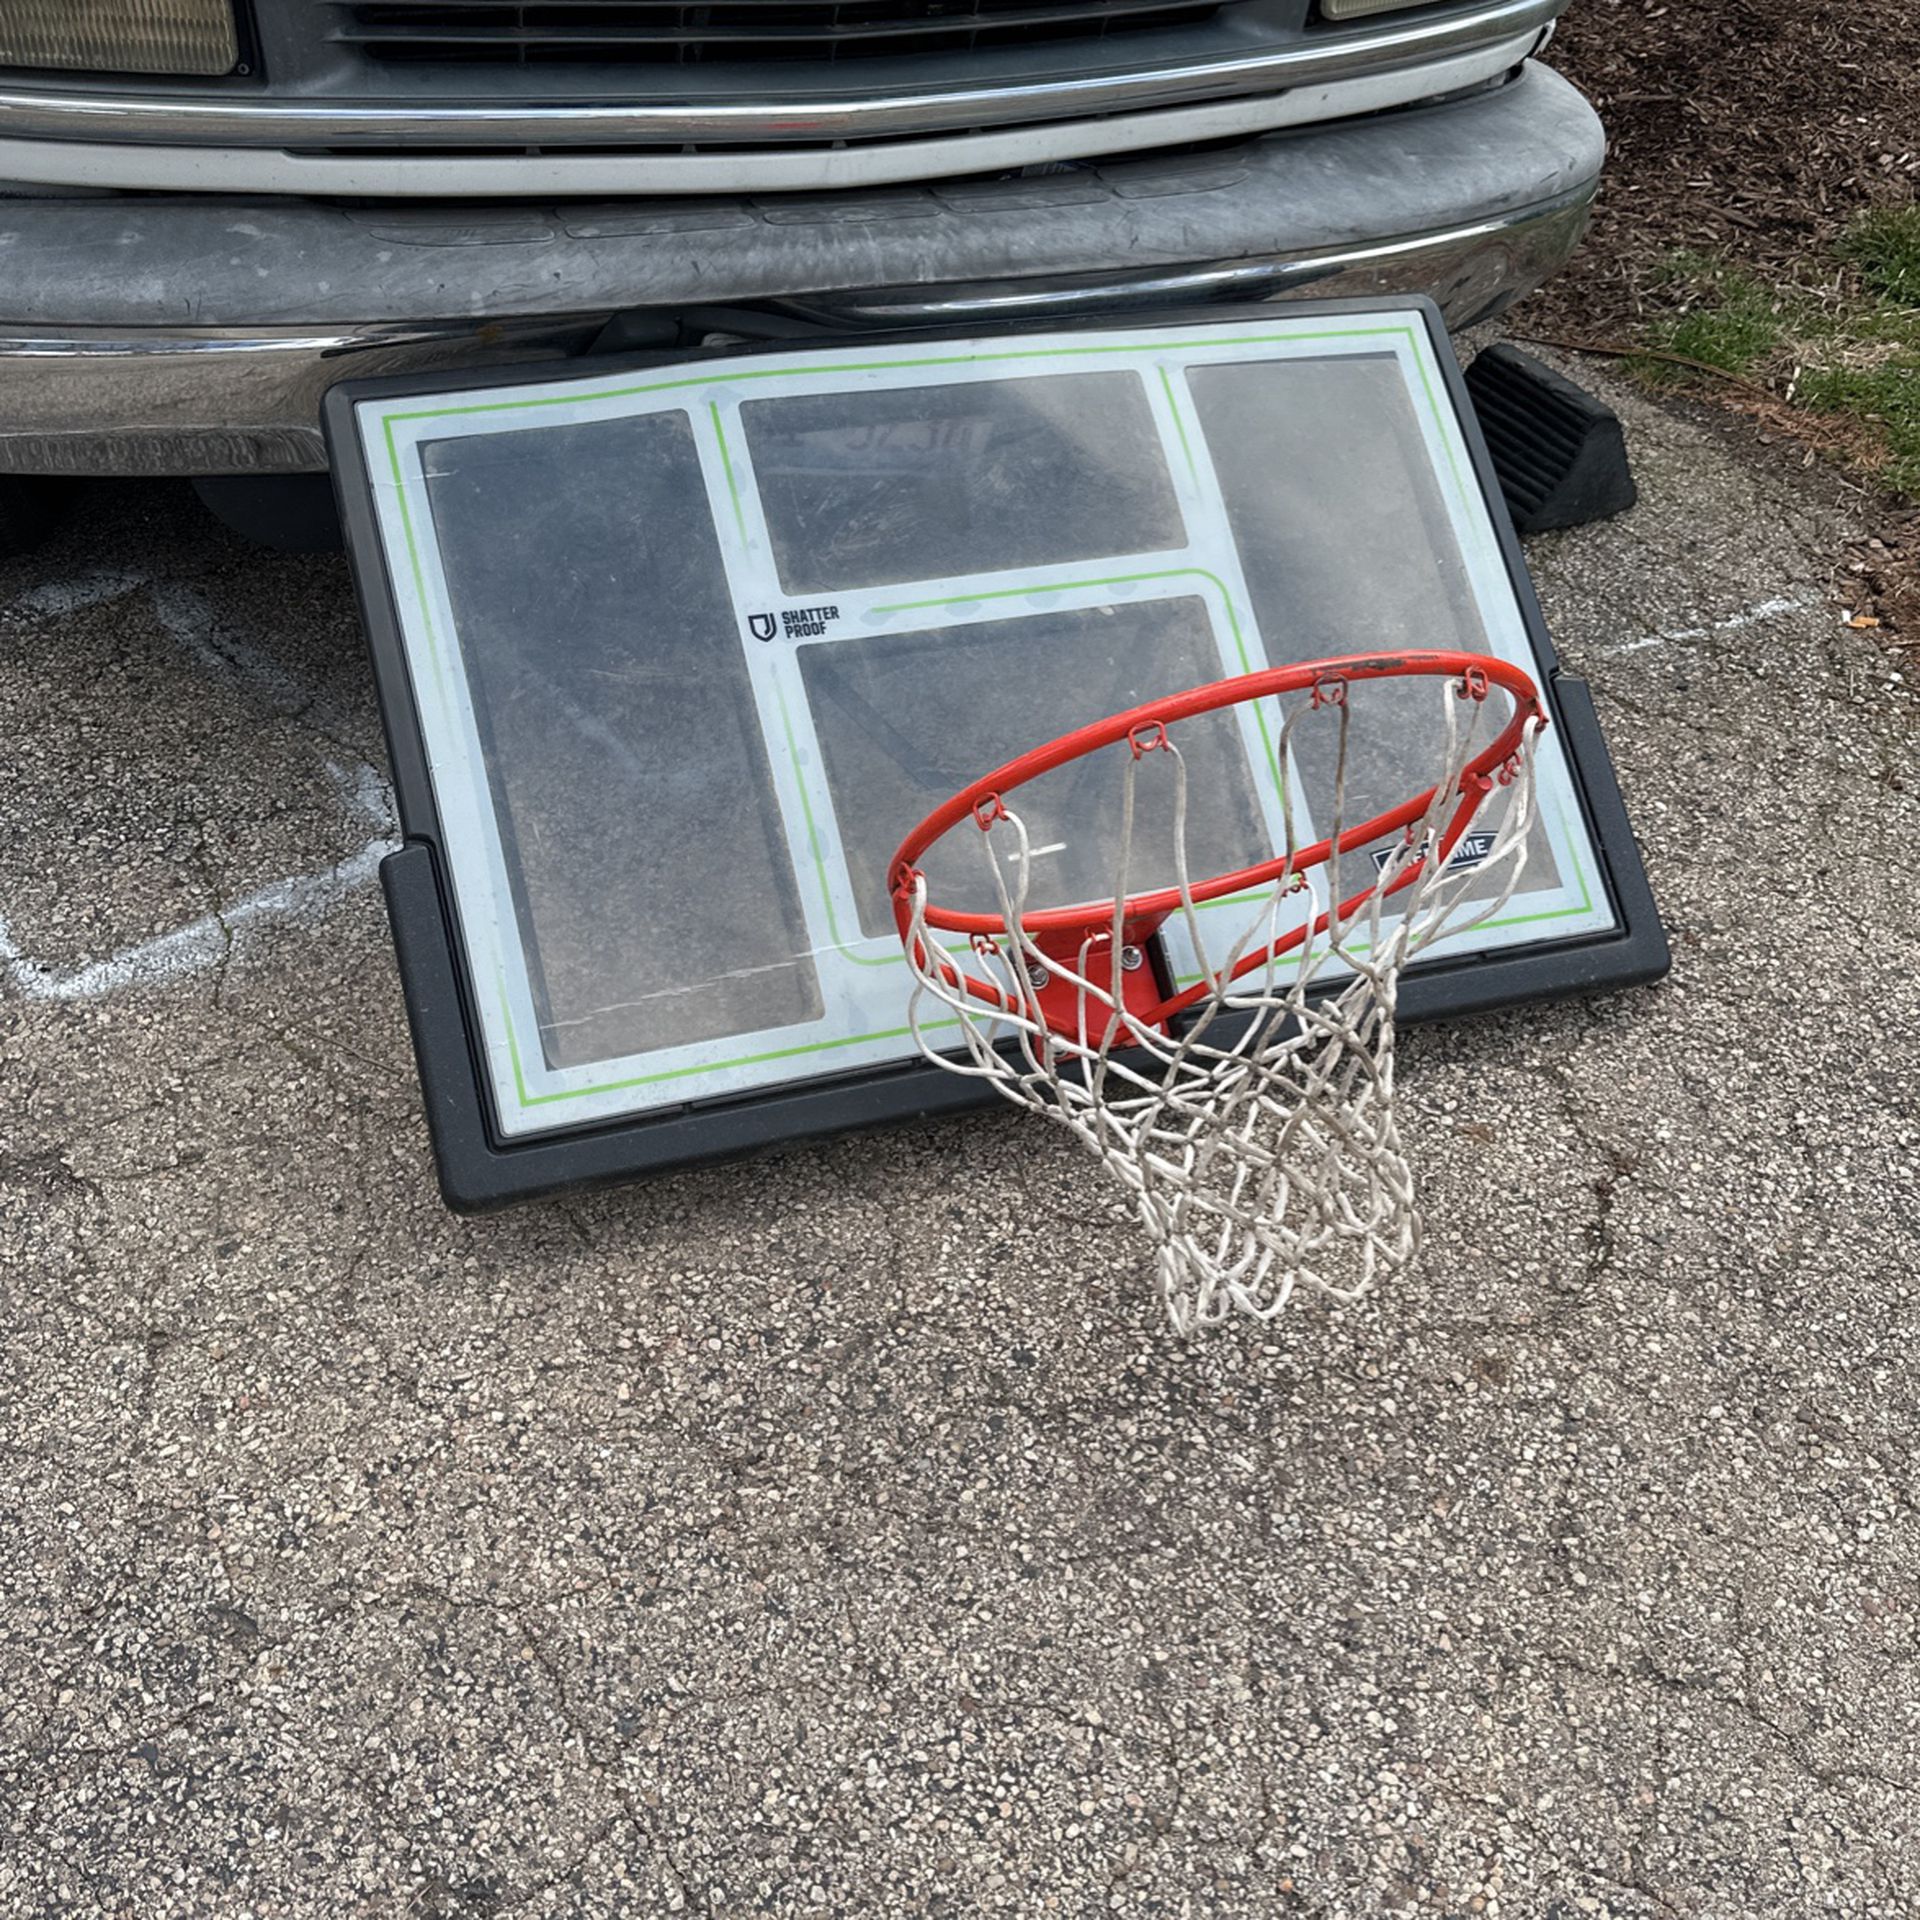 44 Inch Lifetime Shatter Proof Basketball Hoop